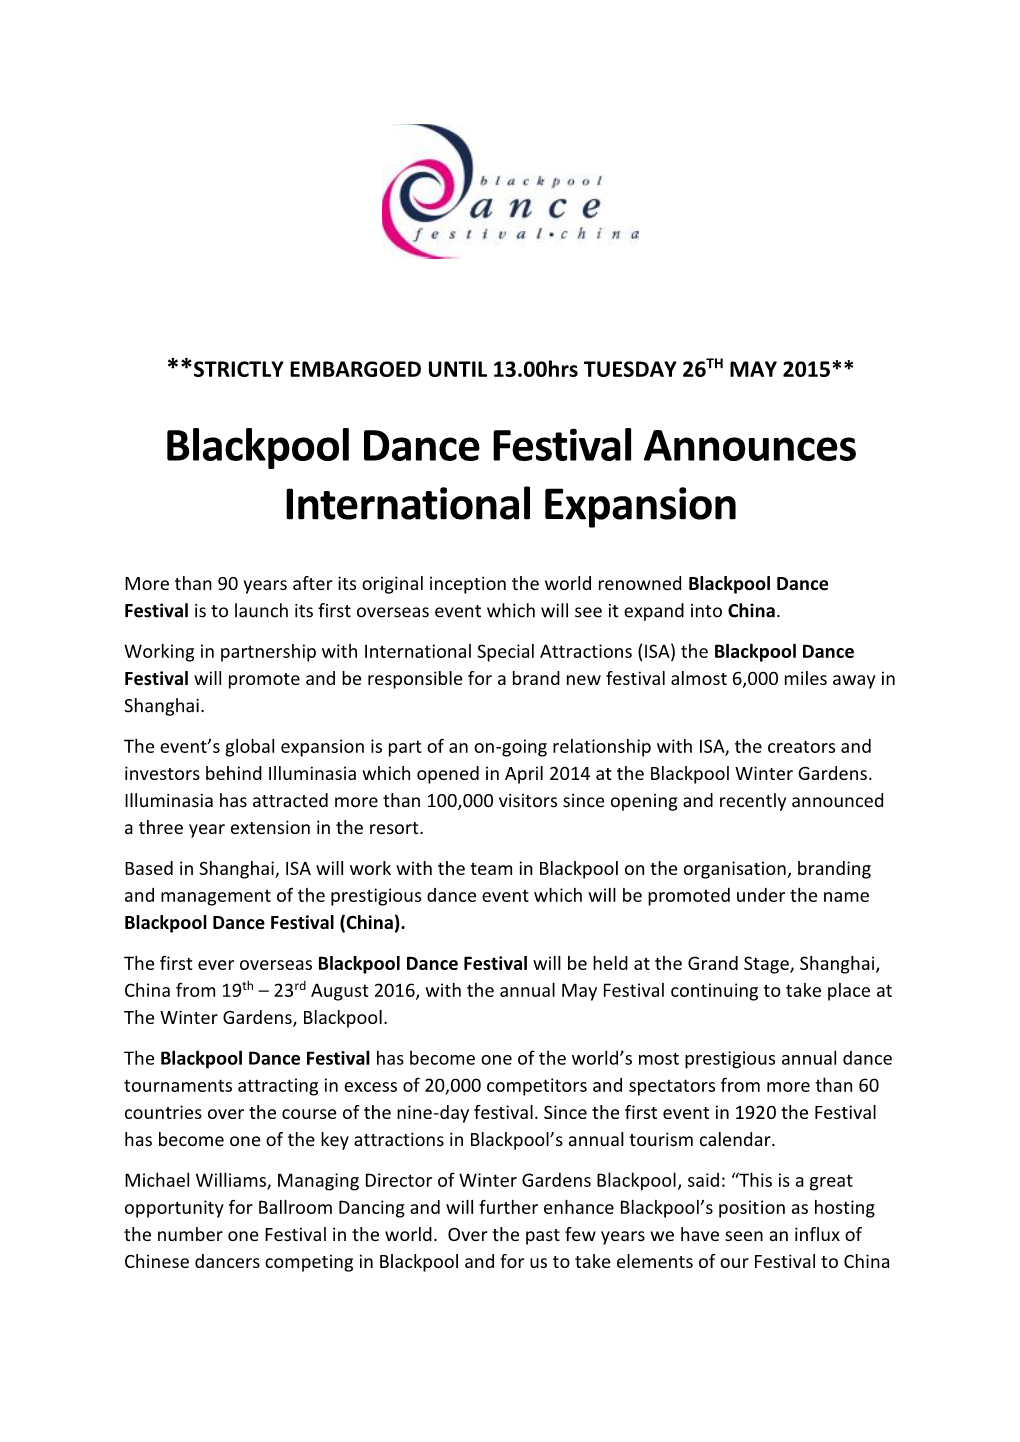 Blackpool Dance Festival Announces International Expansion